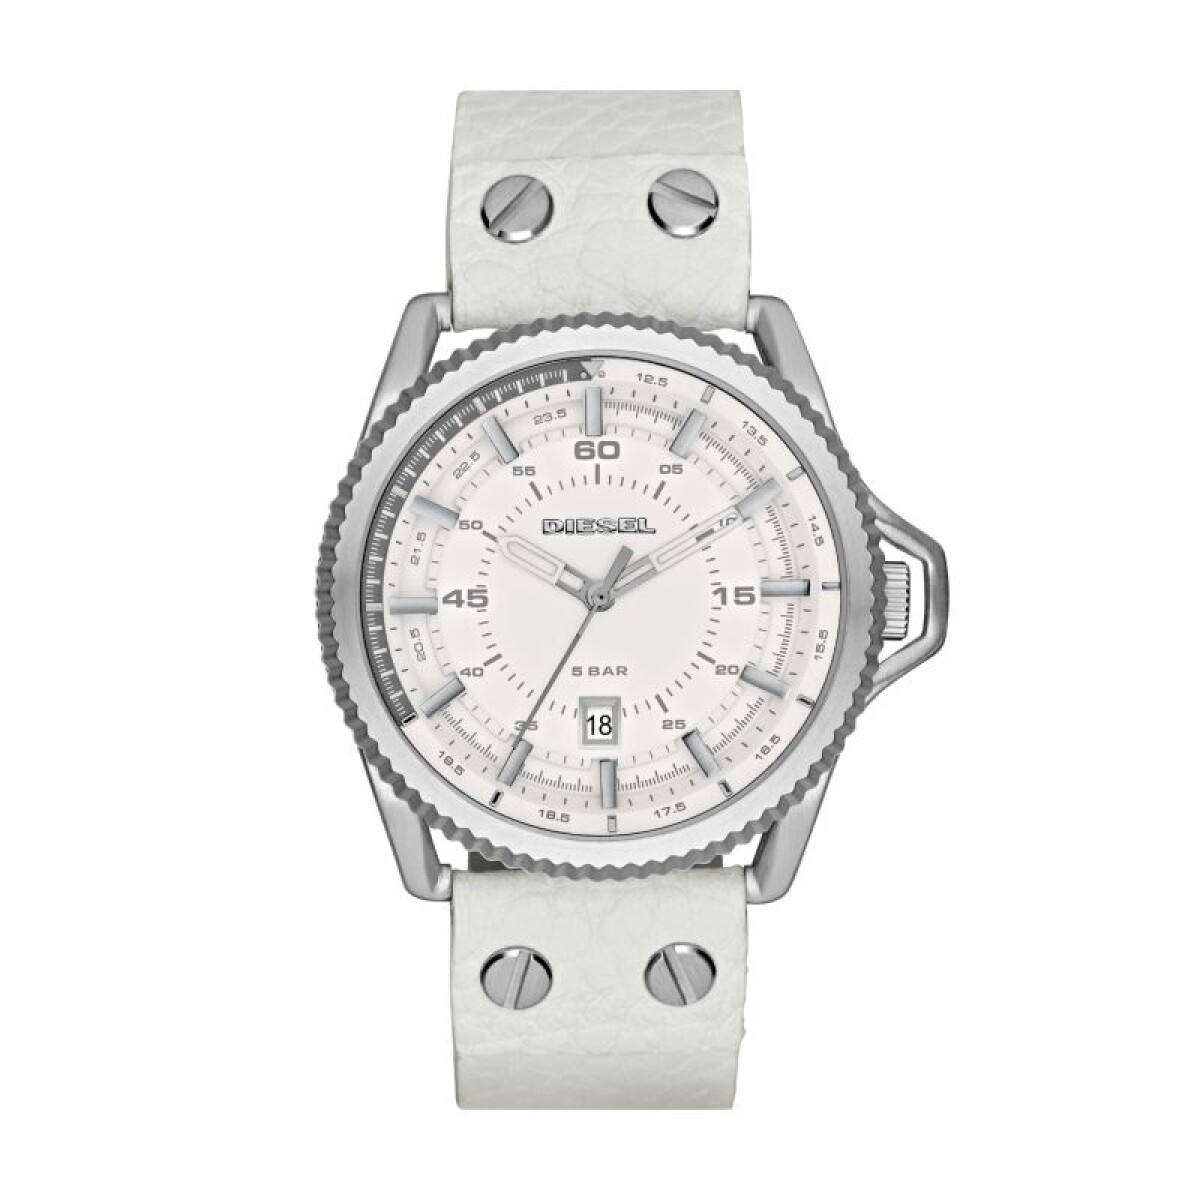 Reloj Diesel Fashion Cuero Blanco 